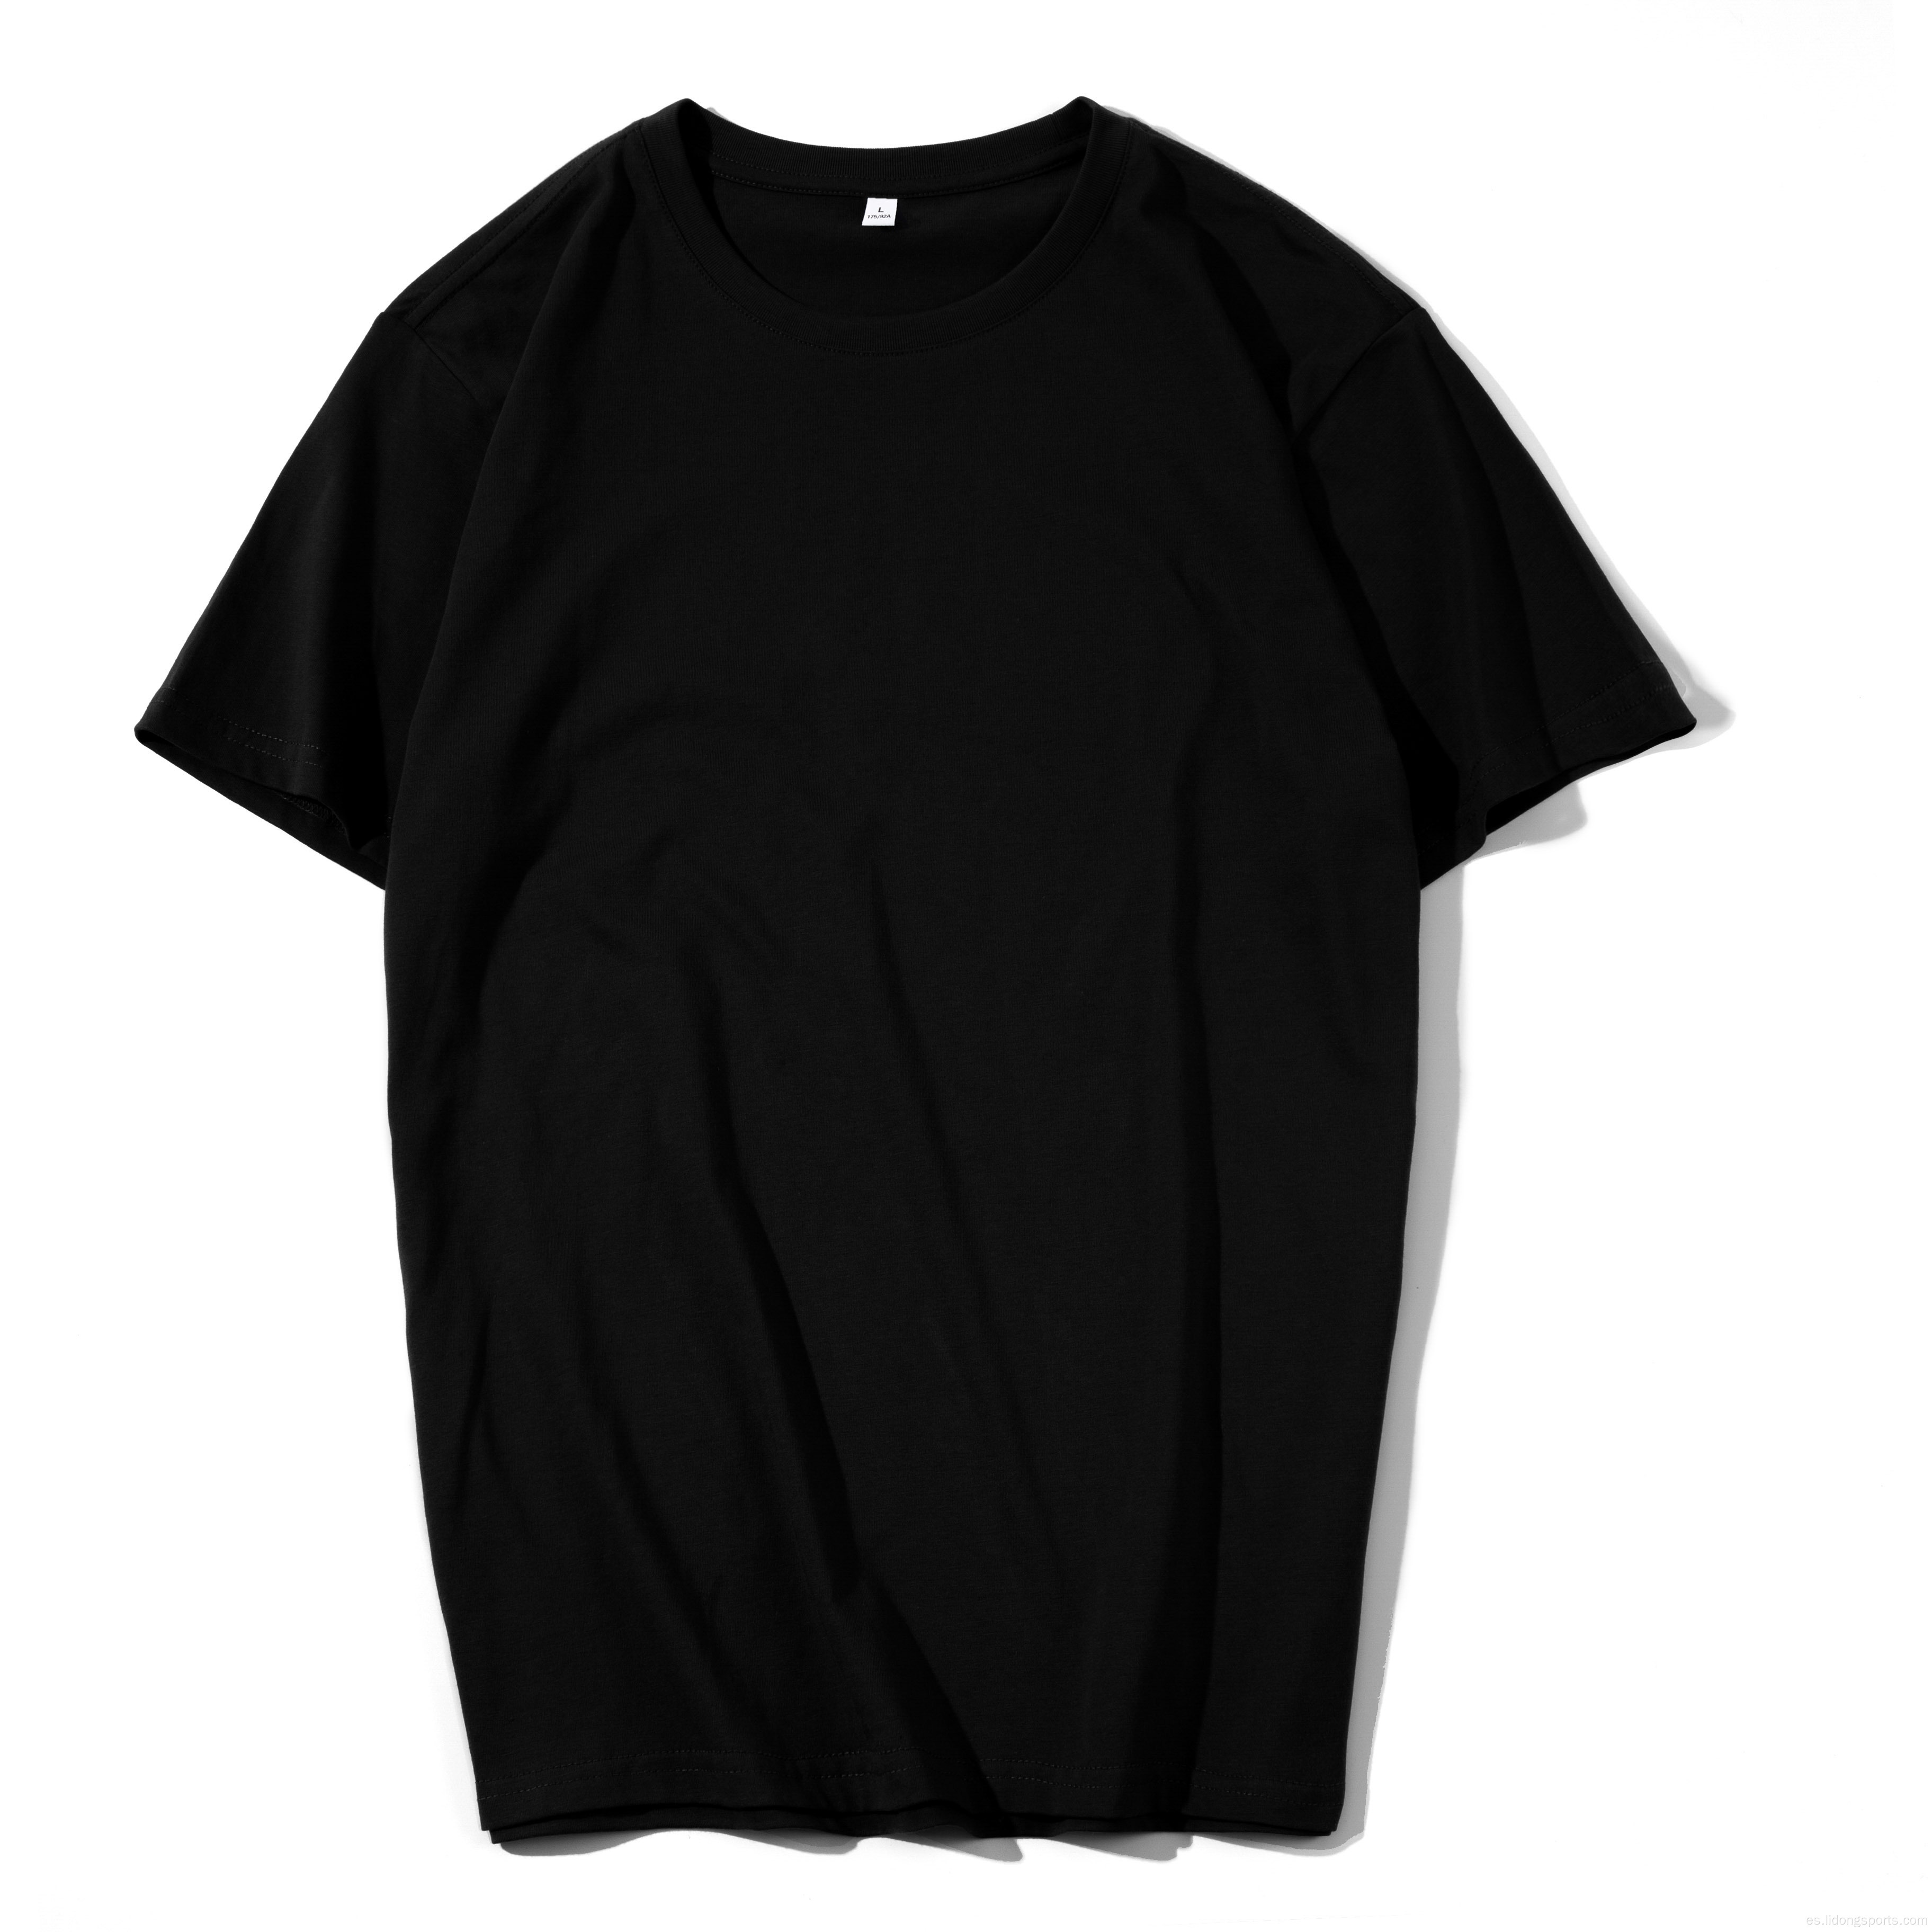 Camisetas para hombres de moda de algodón unisex unisex unisex